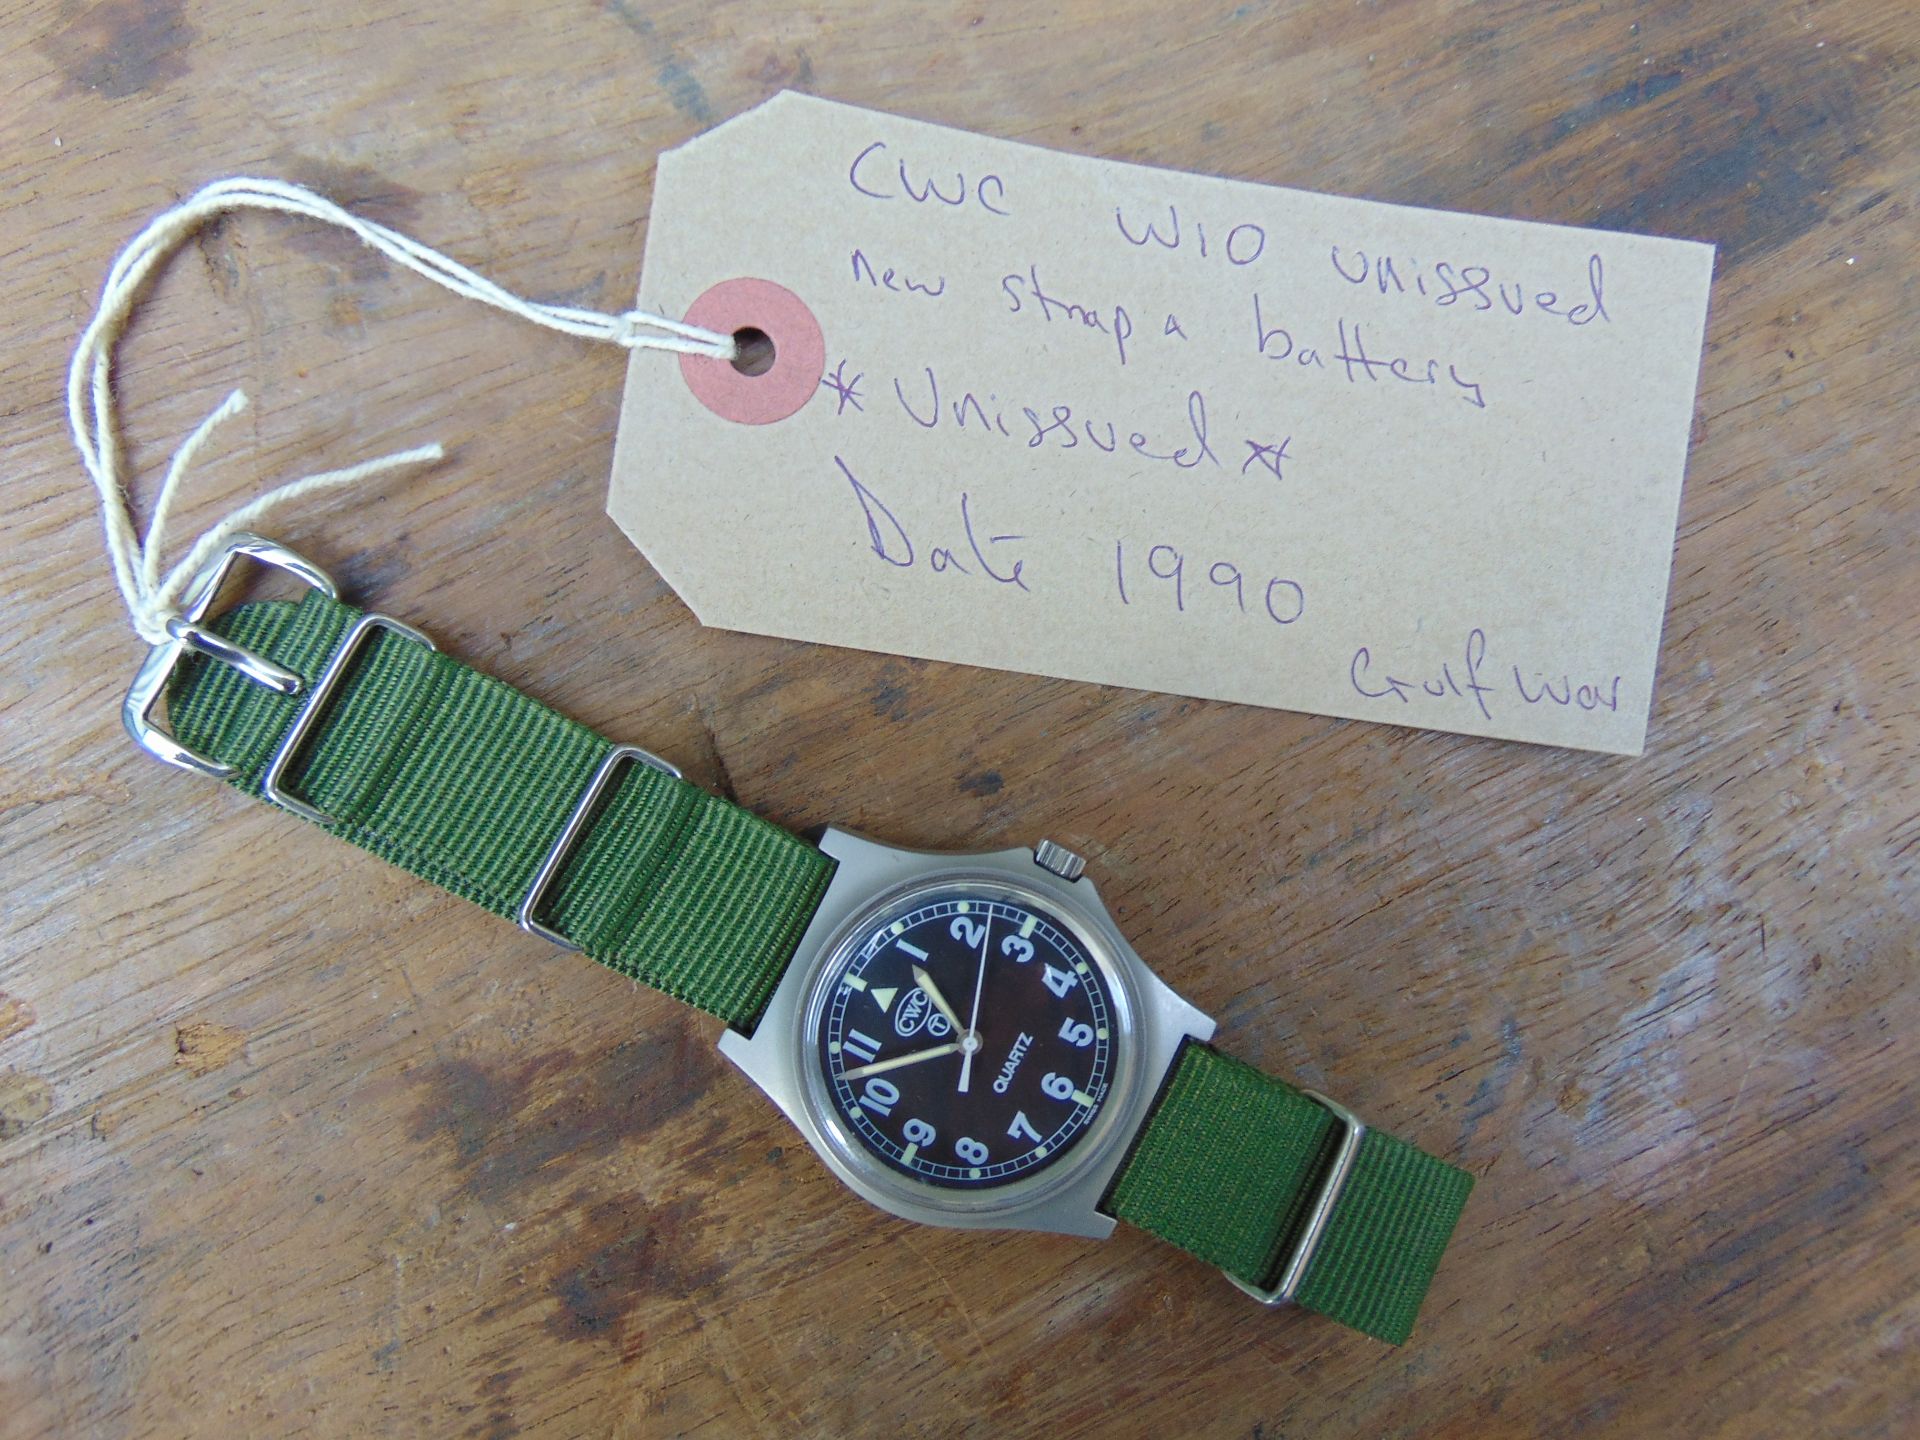 1 Very Rare Genuine British Army, unissued Gulf War CWC quartz wrist watch - Image 2 of 5